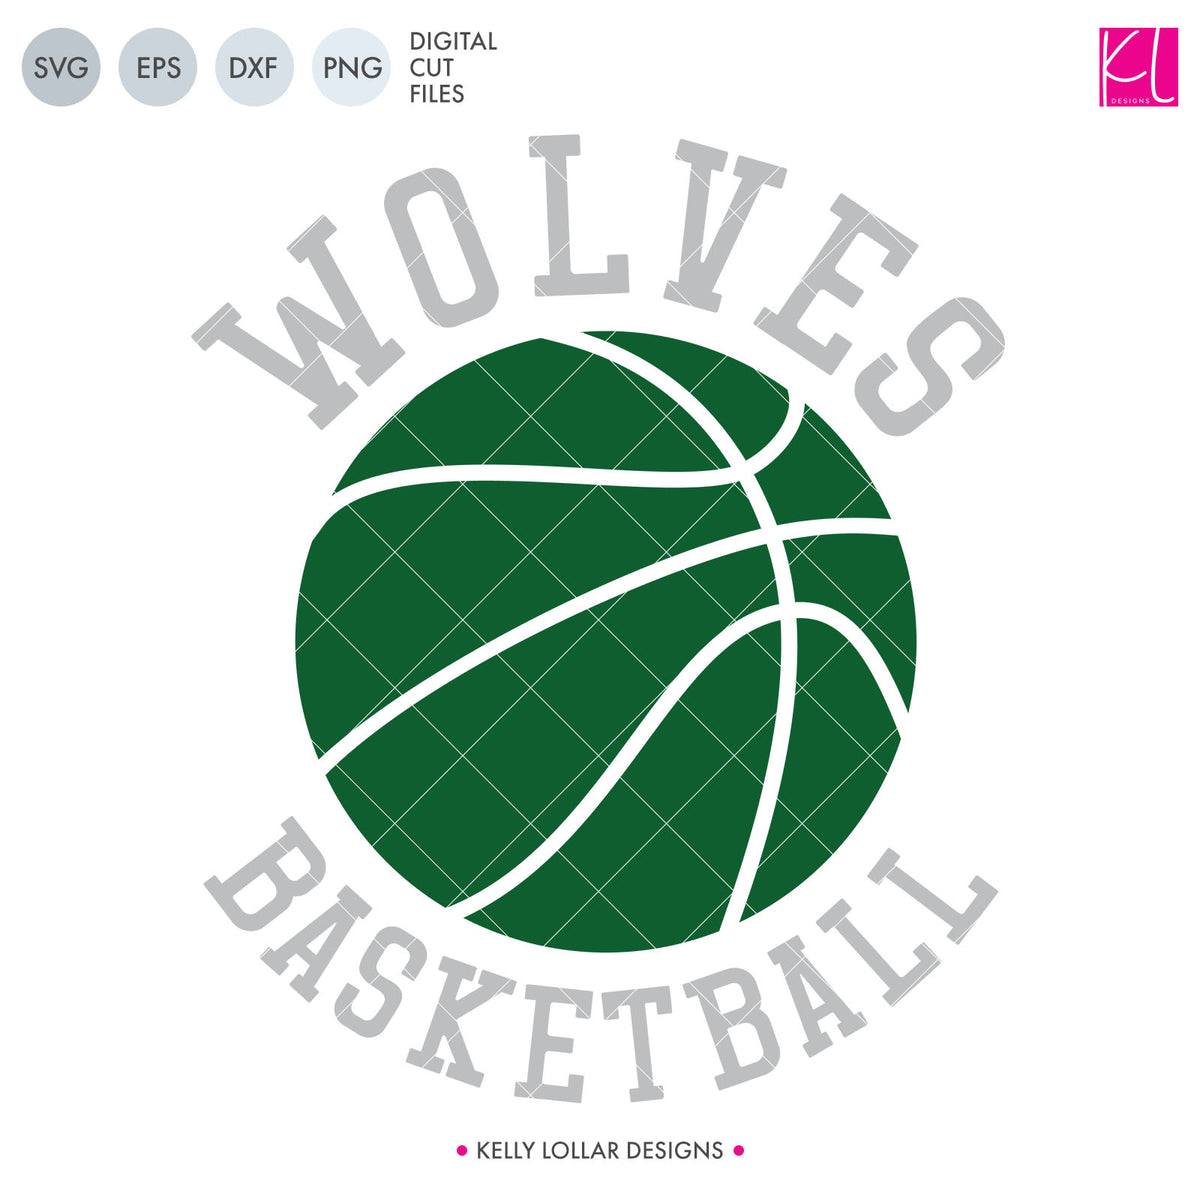 Wolves Basketball Bundle | SVG DXF EPS PNG Cut Files